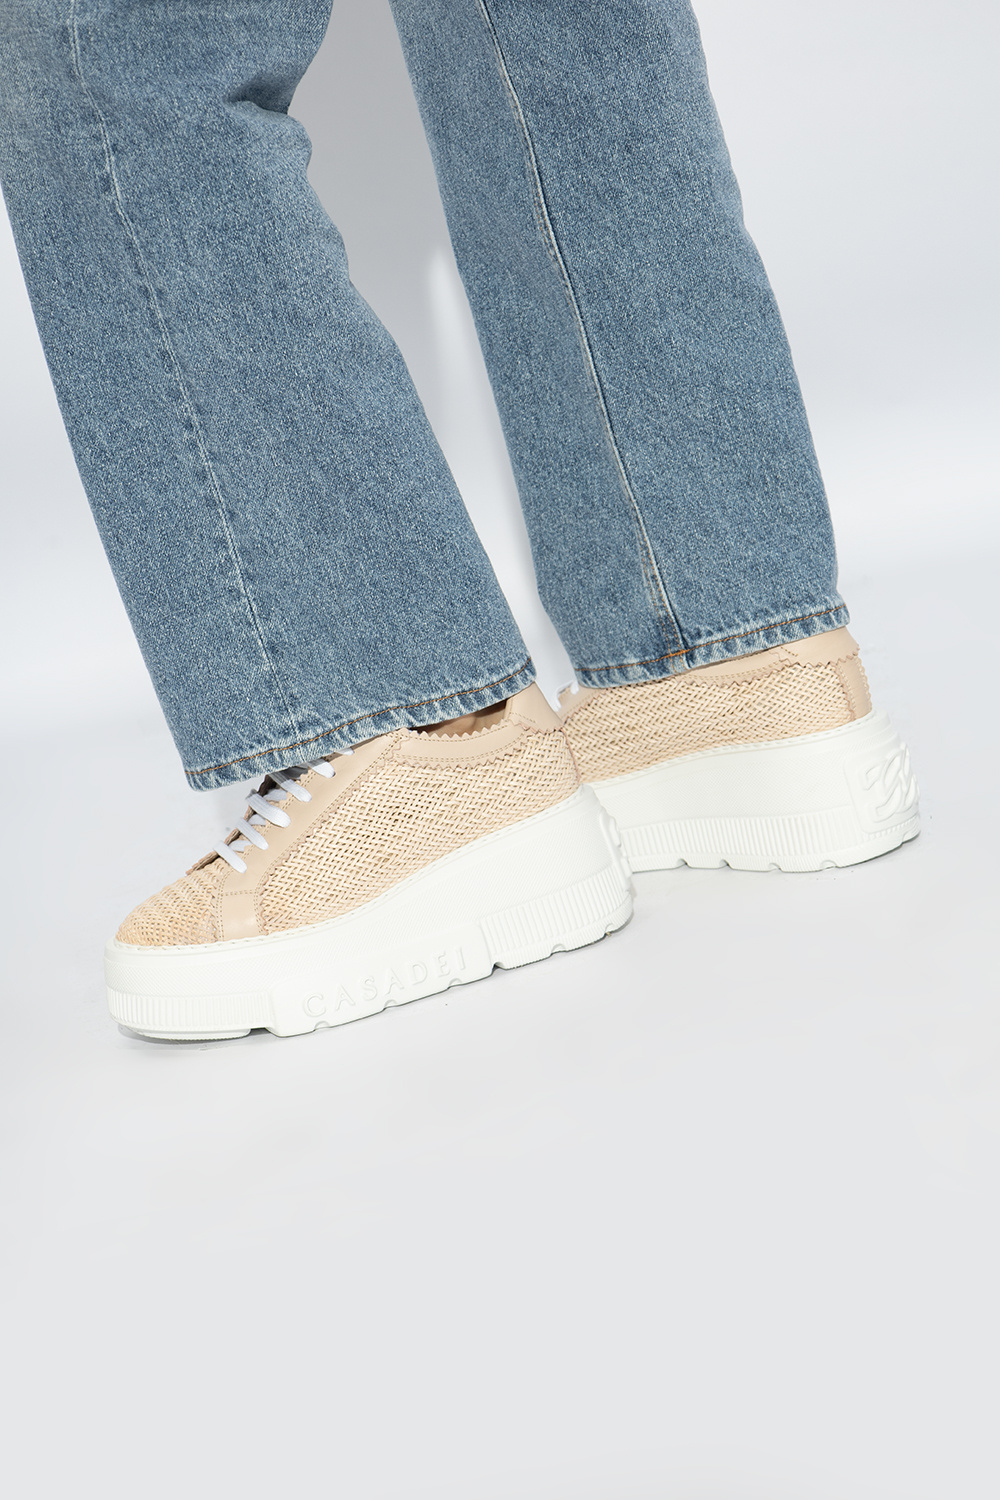 Casadei ‘Nexus Hanoi’ platform sneakers